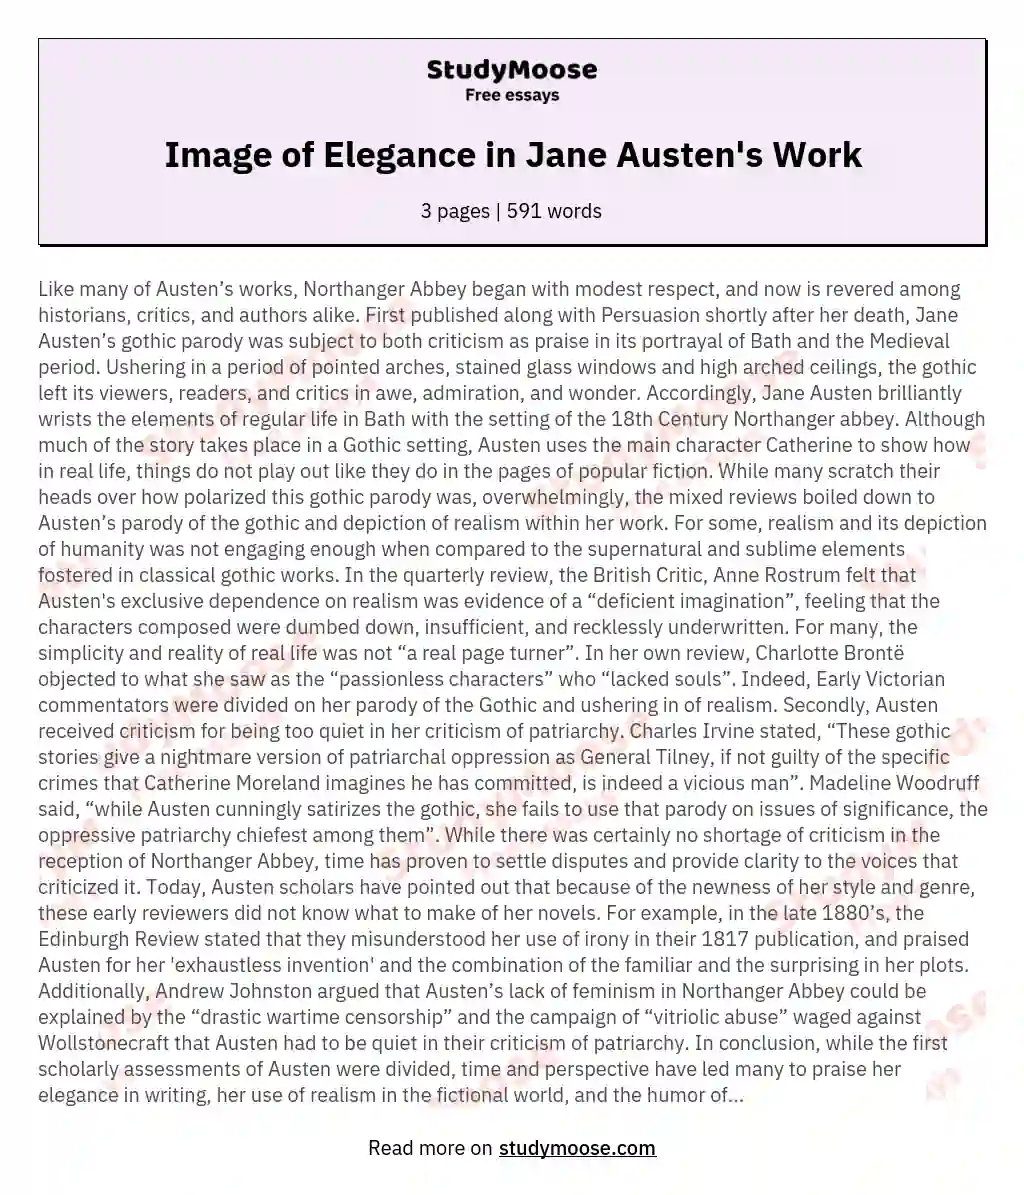 Image of Elegance in Jane Austen's Work essay